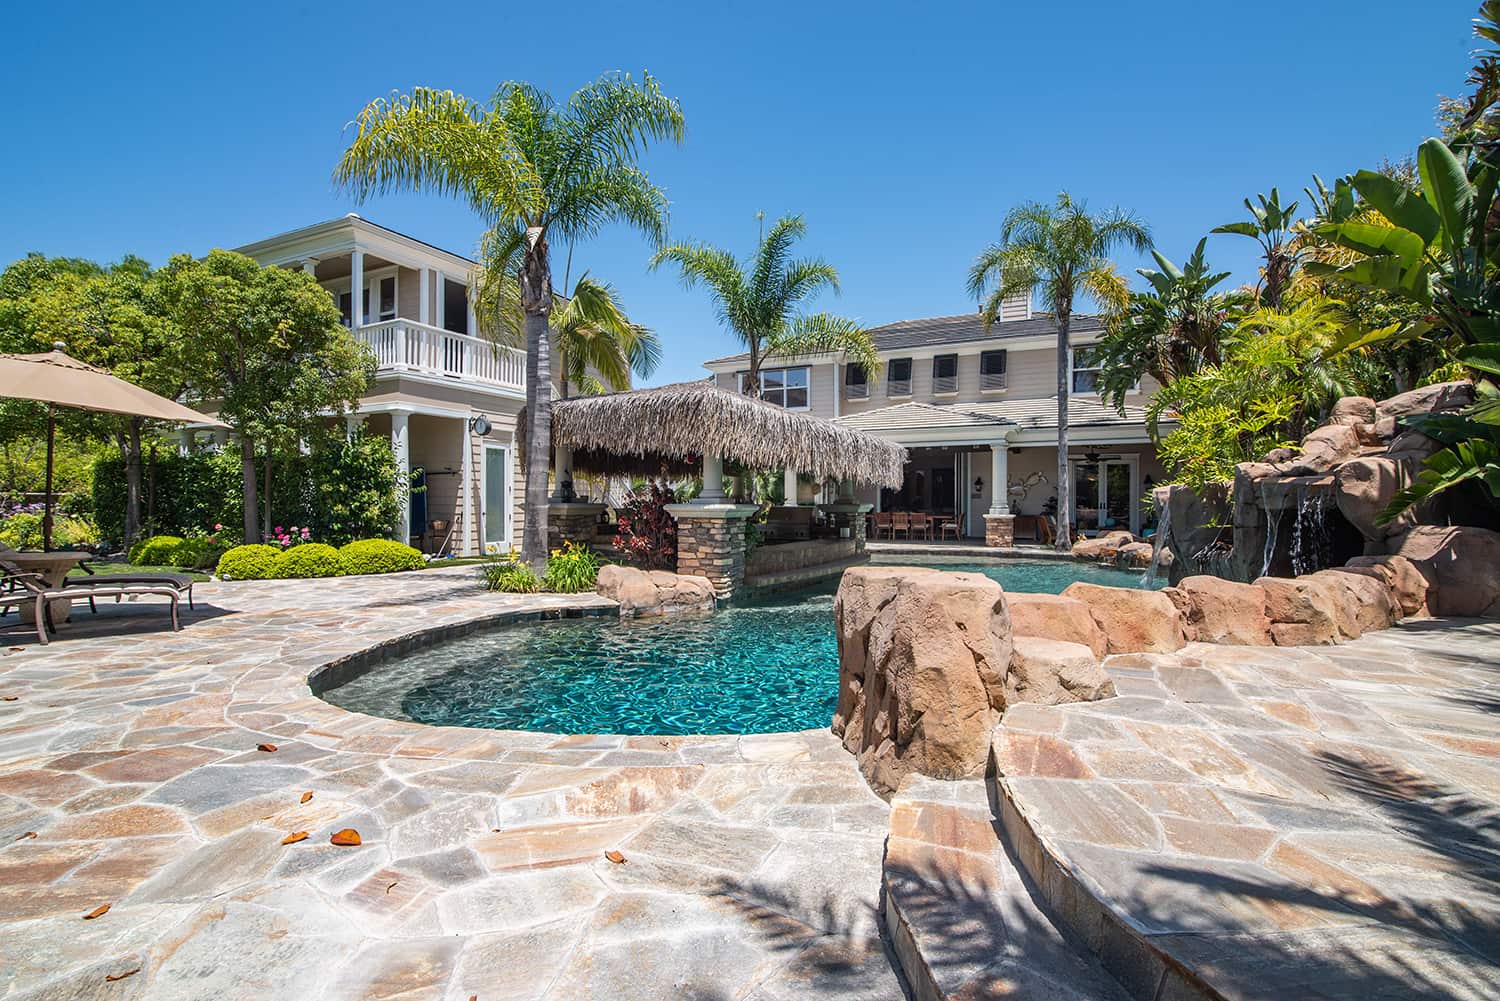 Luxury Home Backyard With Palapa Top Swim Up Bar, Pool, Rock Slide, And Palm Trees.